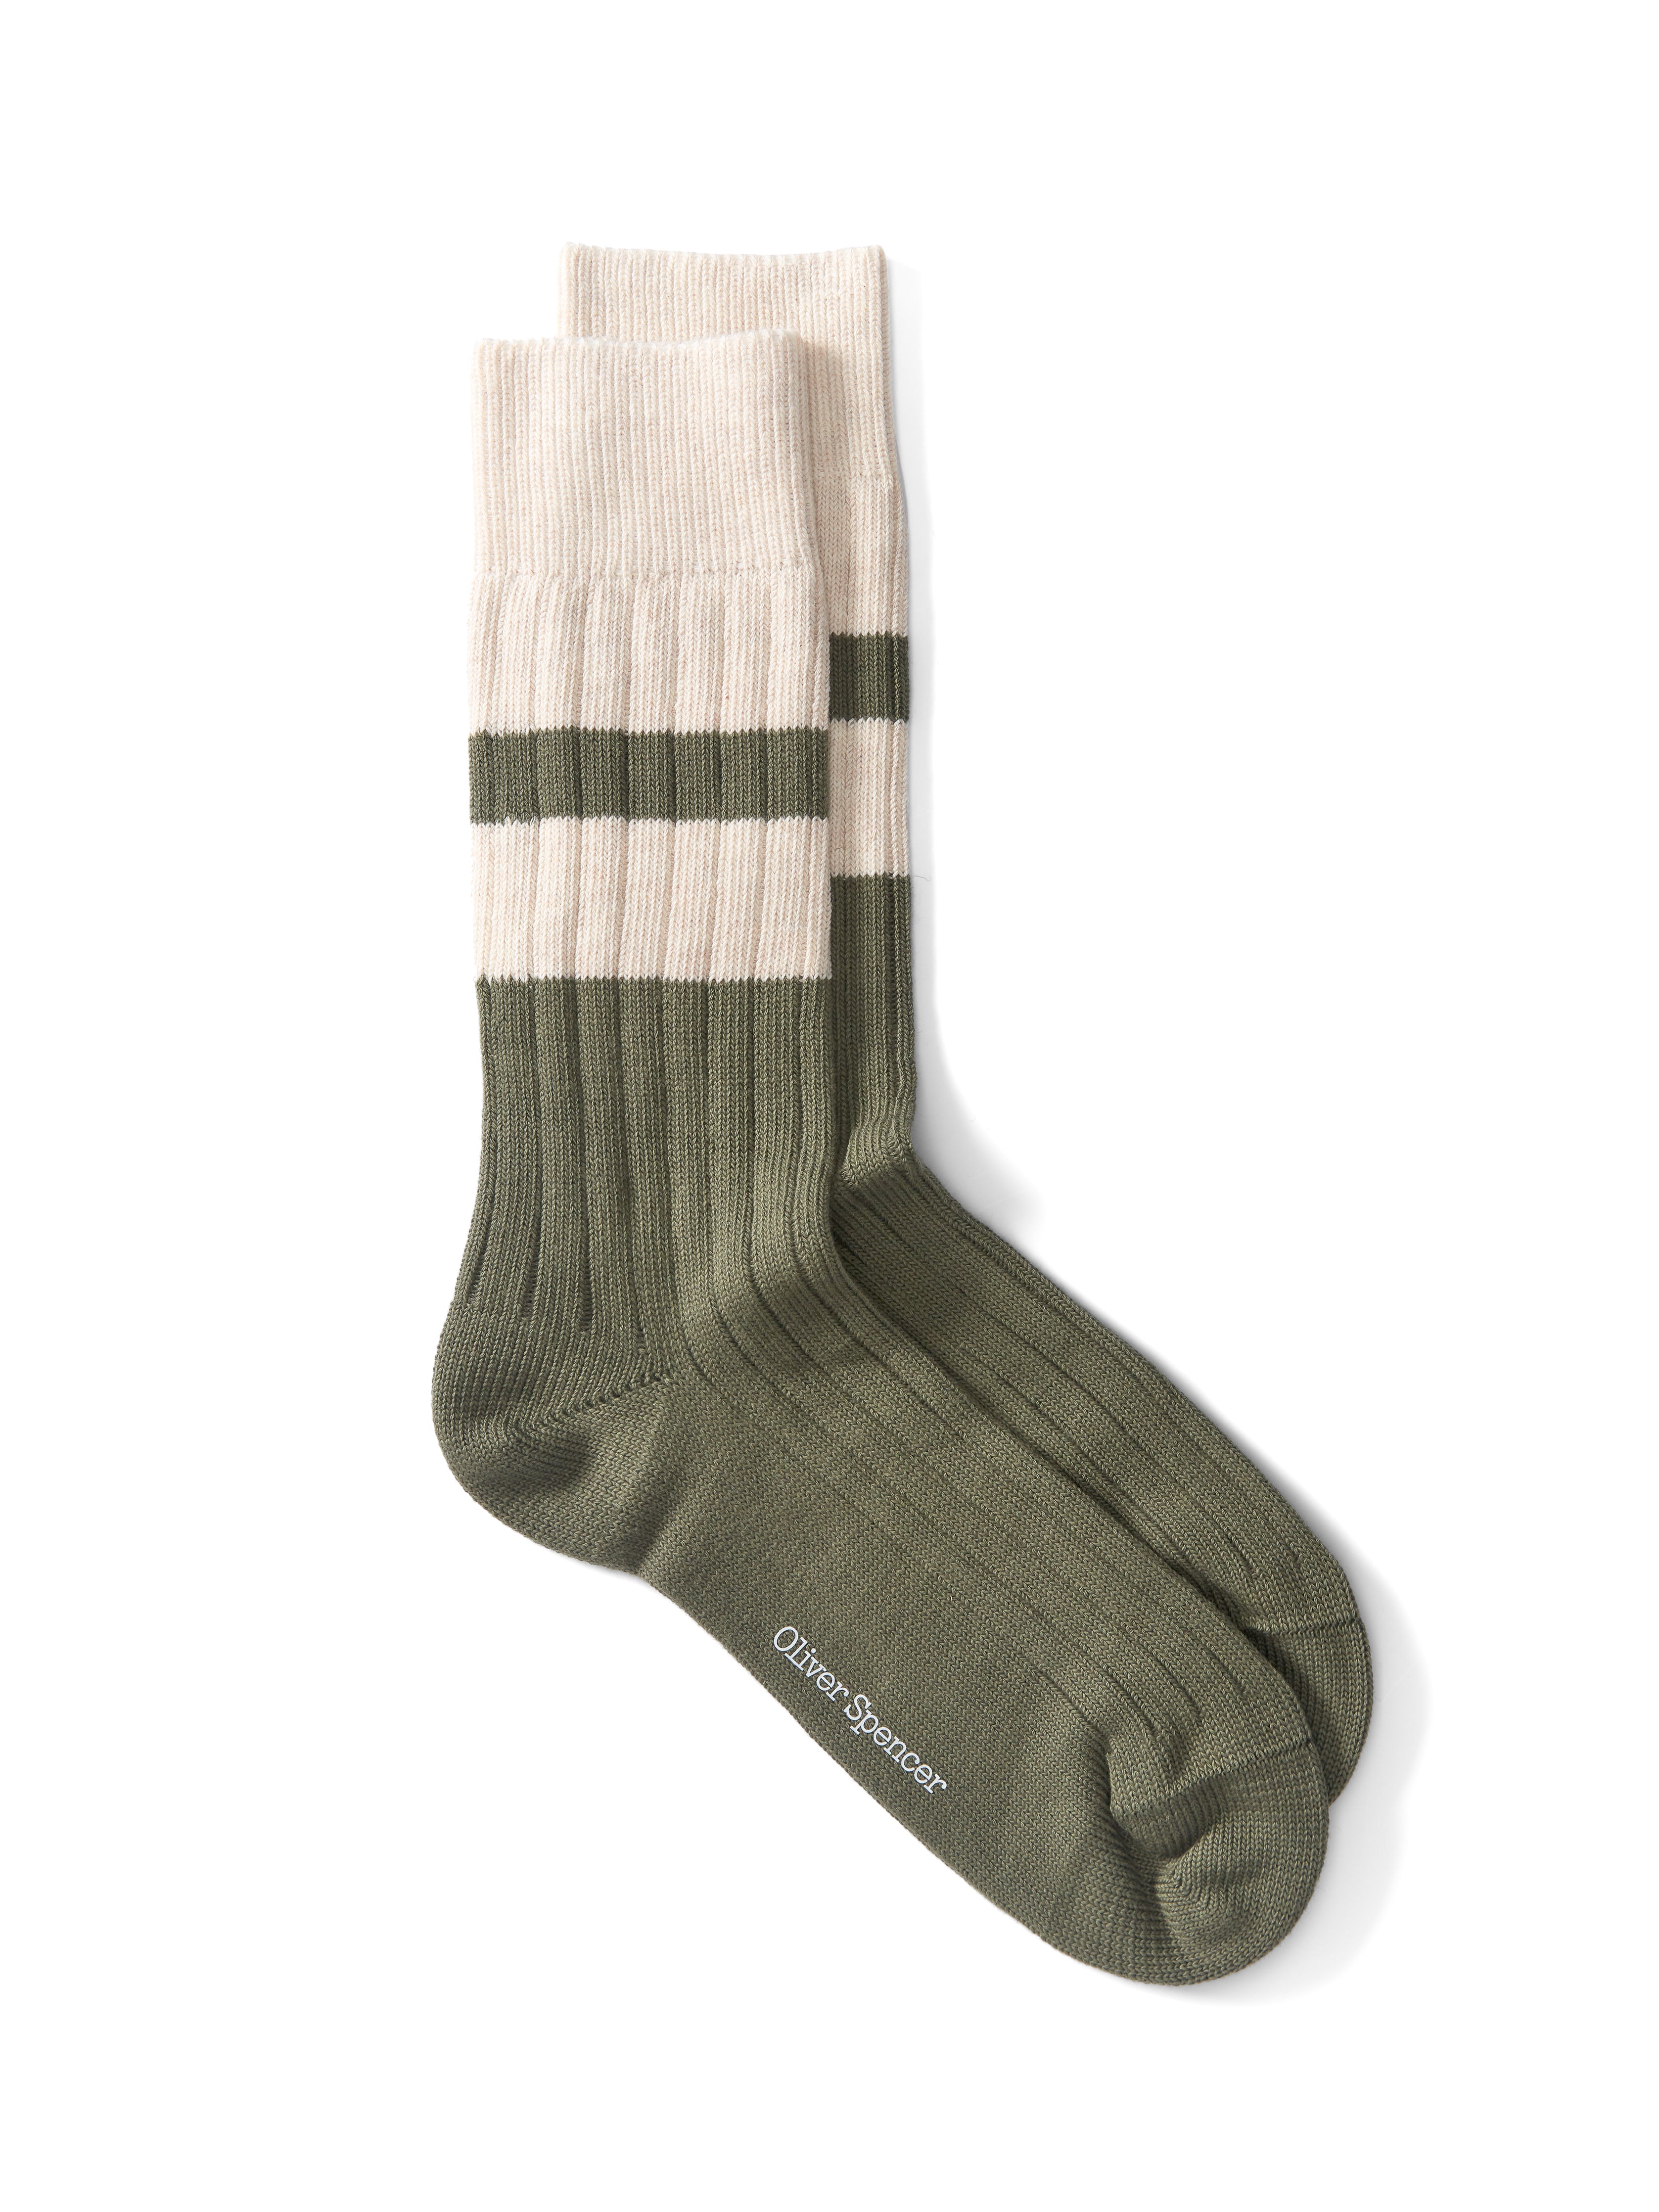 Polperro Socks Merrow Sage Green/Cream